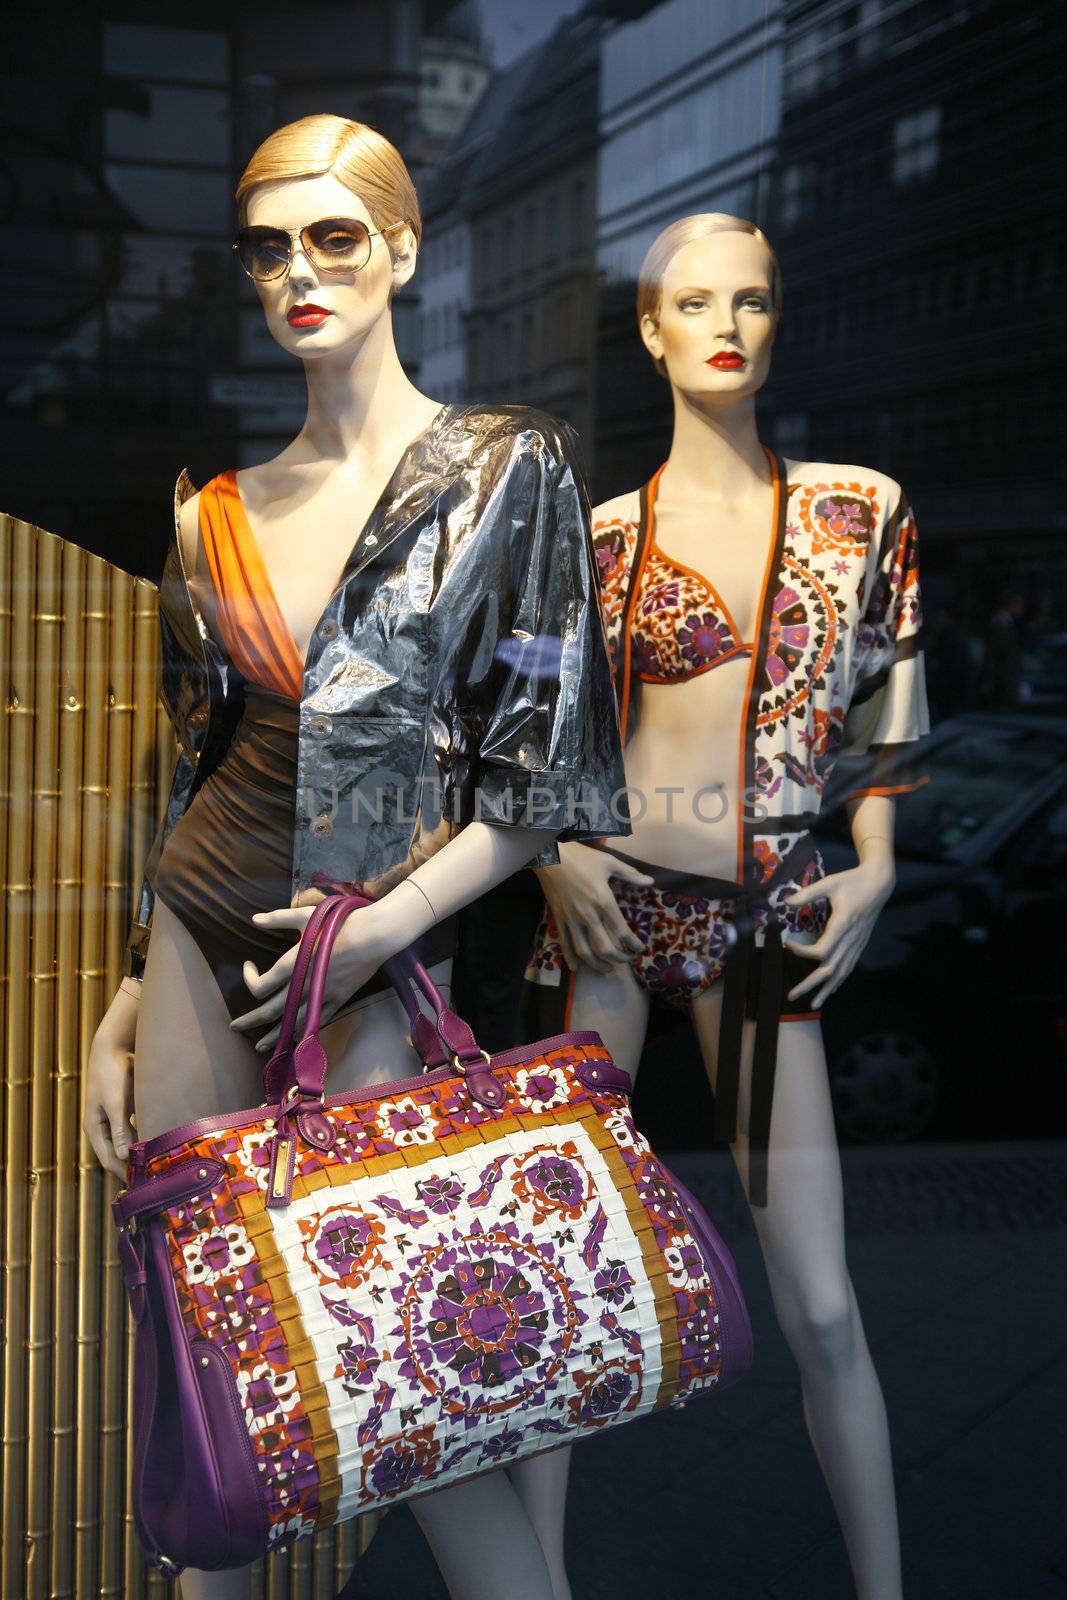 Summer fashion seen through a store window - Berlin , Germany